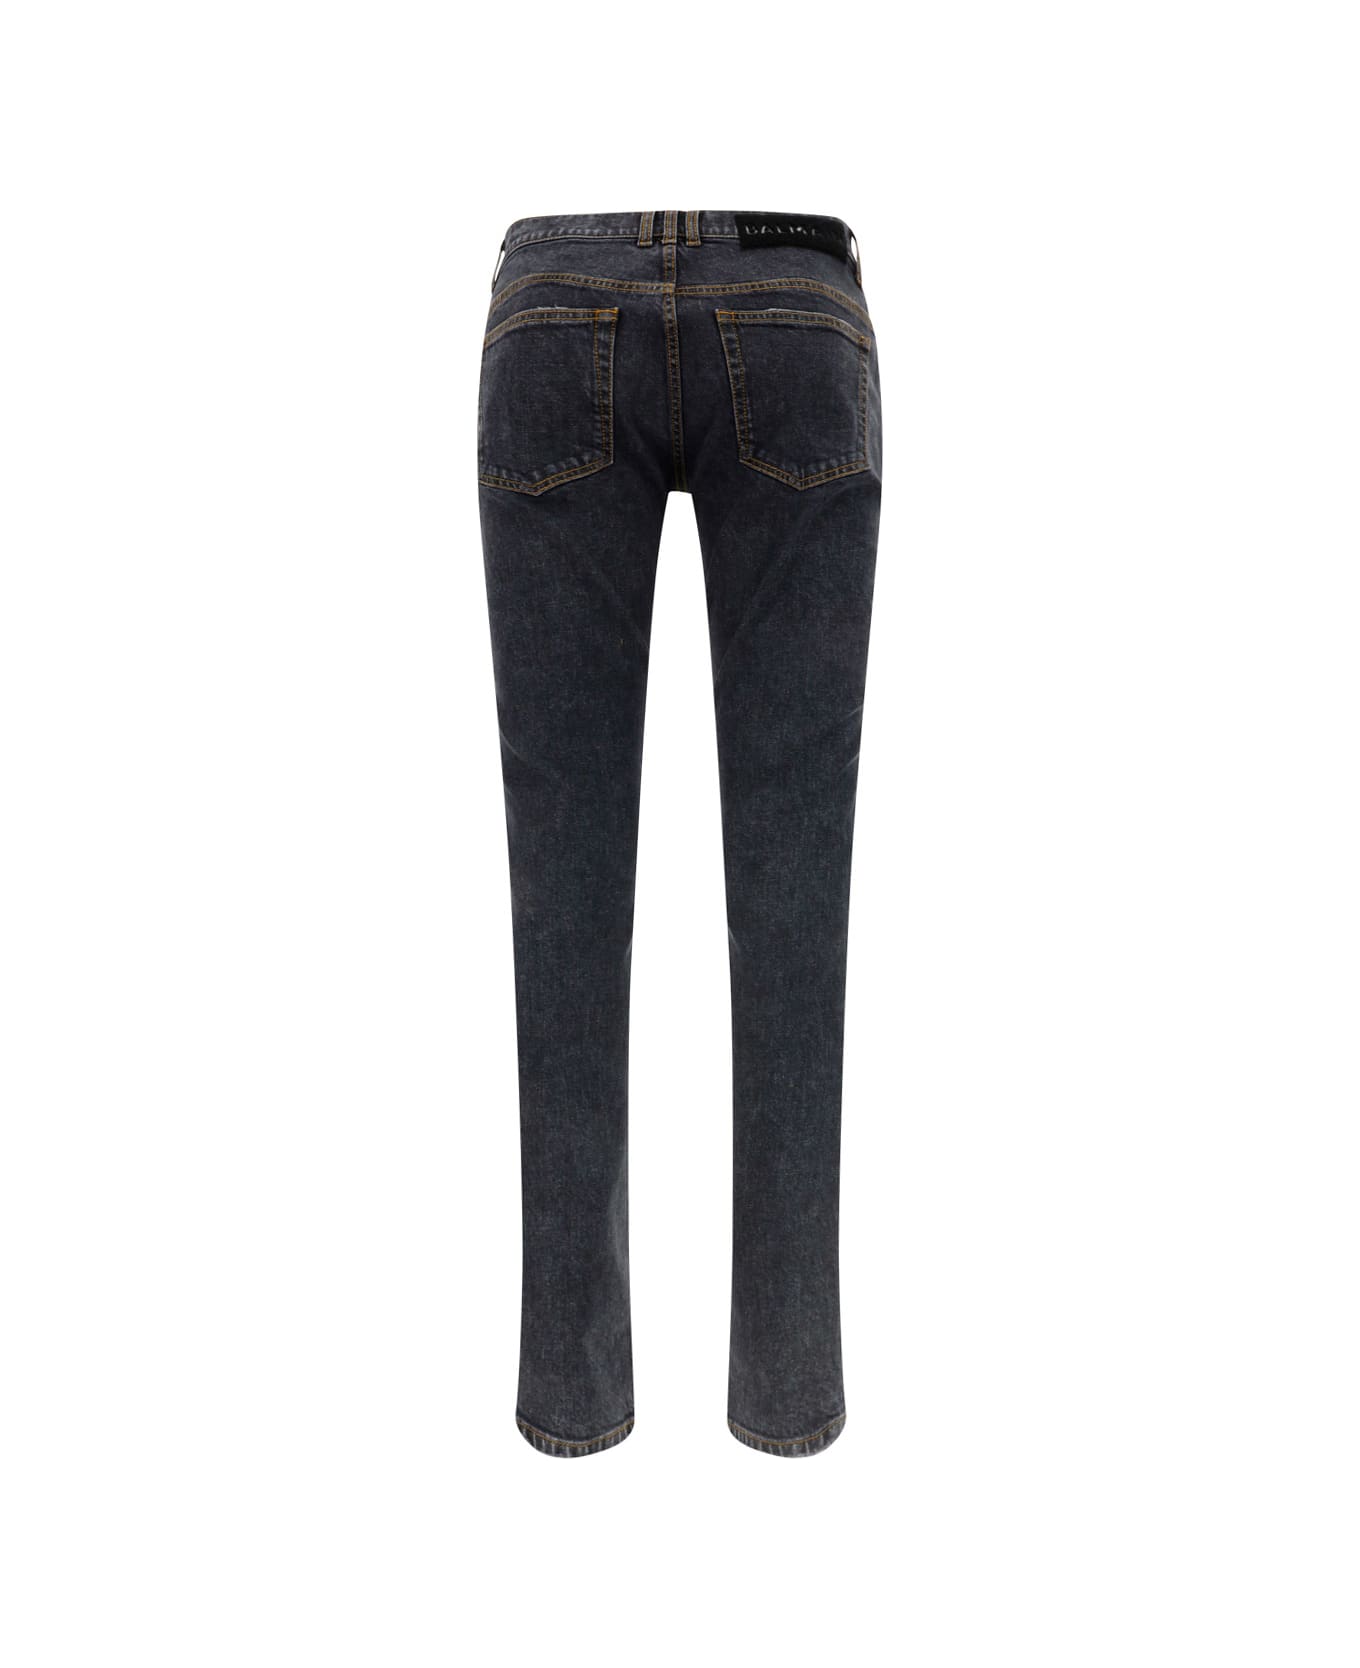 Balmain 5-pocket Slim Fit Jeans - Noir Delave' デニム